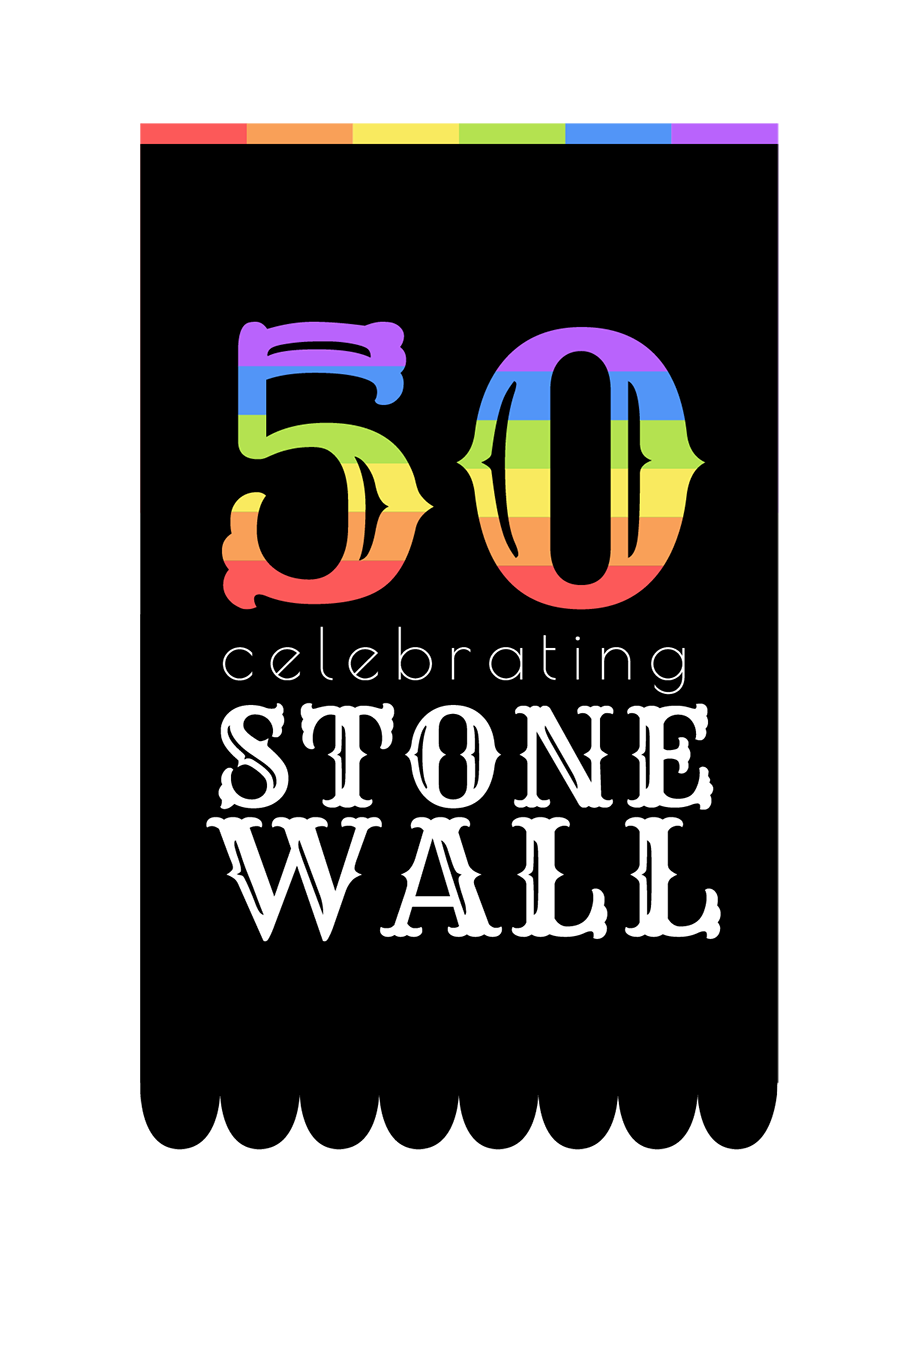 50 years celebrating Stonewall